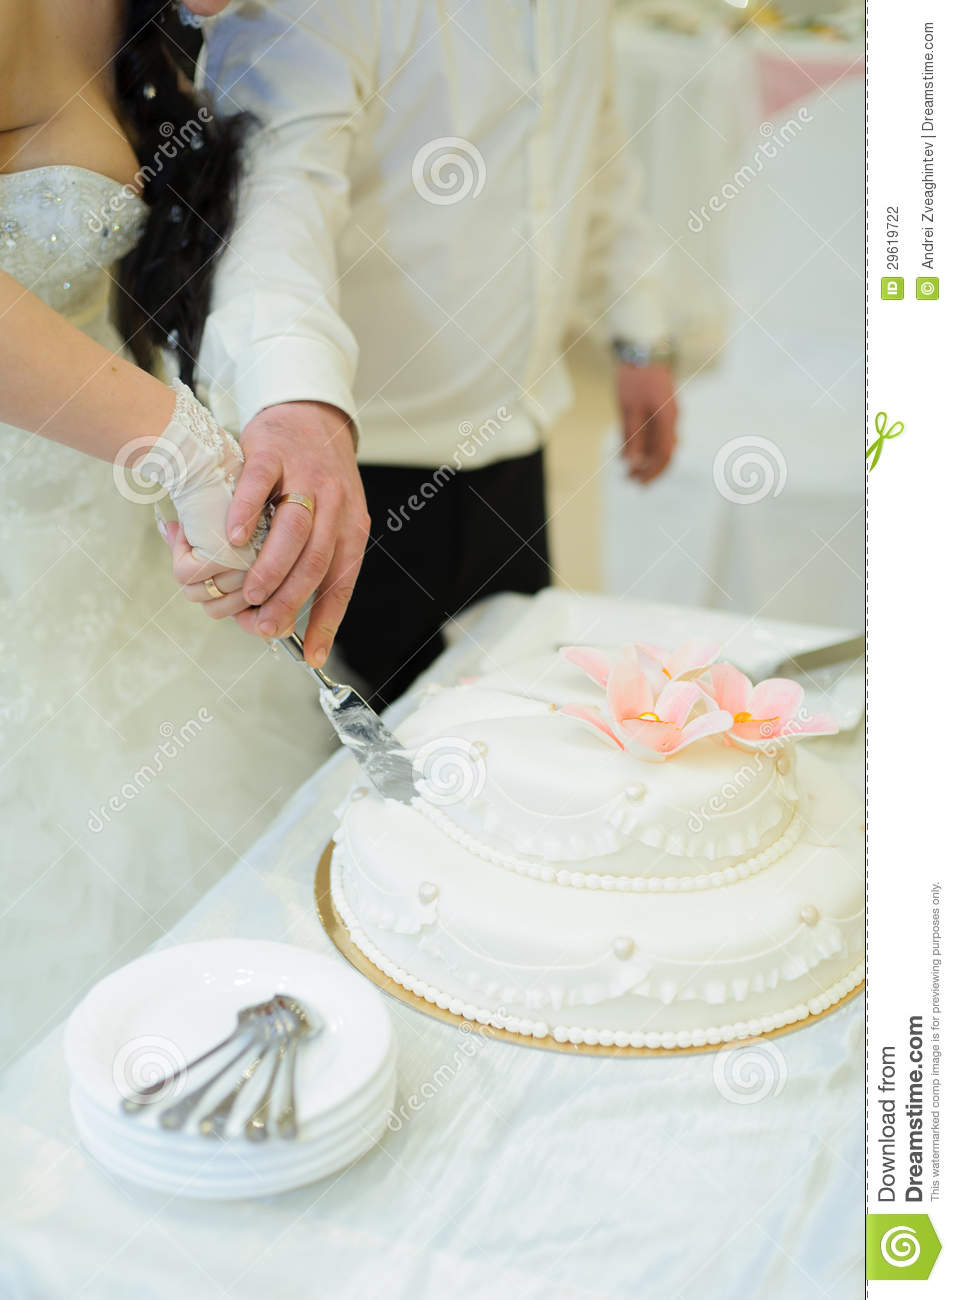 Wedding Cutting Cake Together